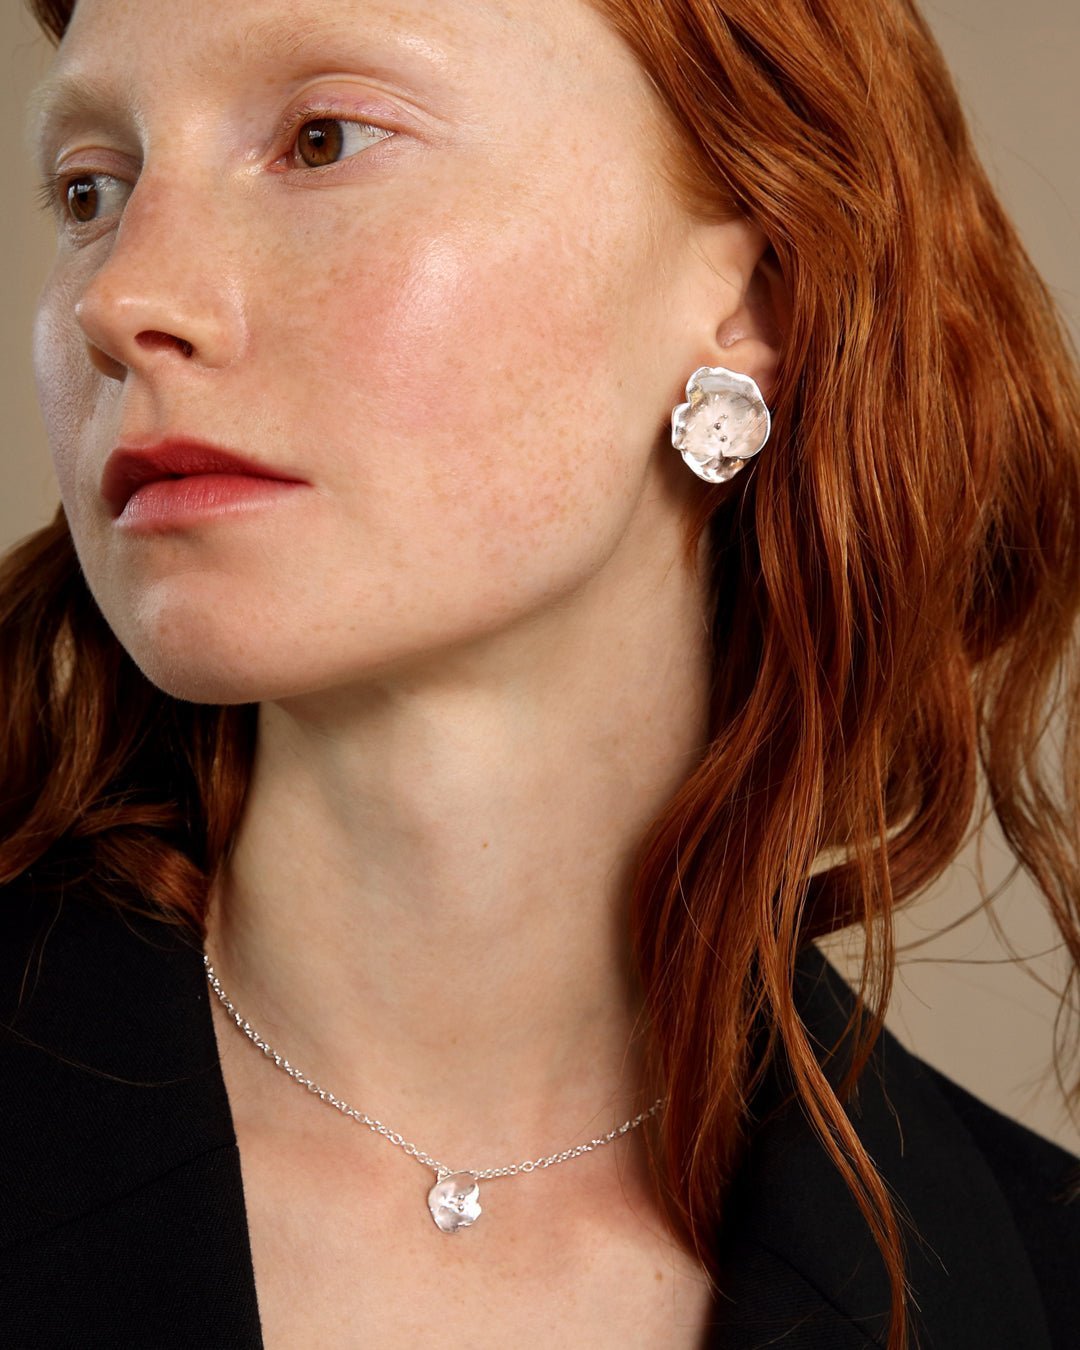 Summer night rose earrings medium size silver half pair left